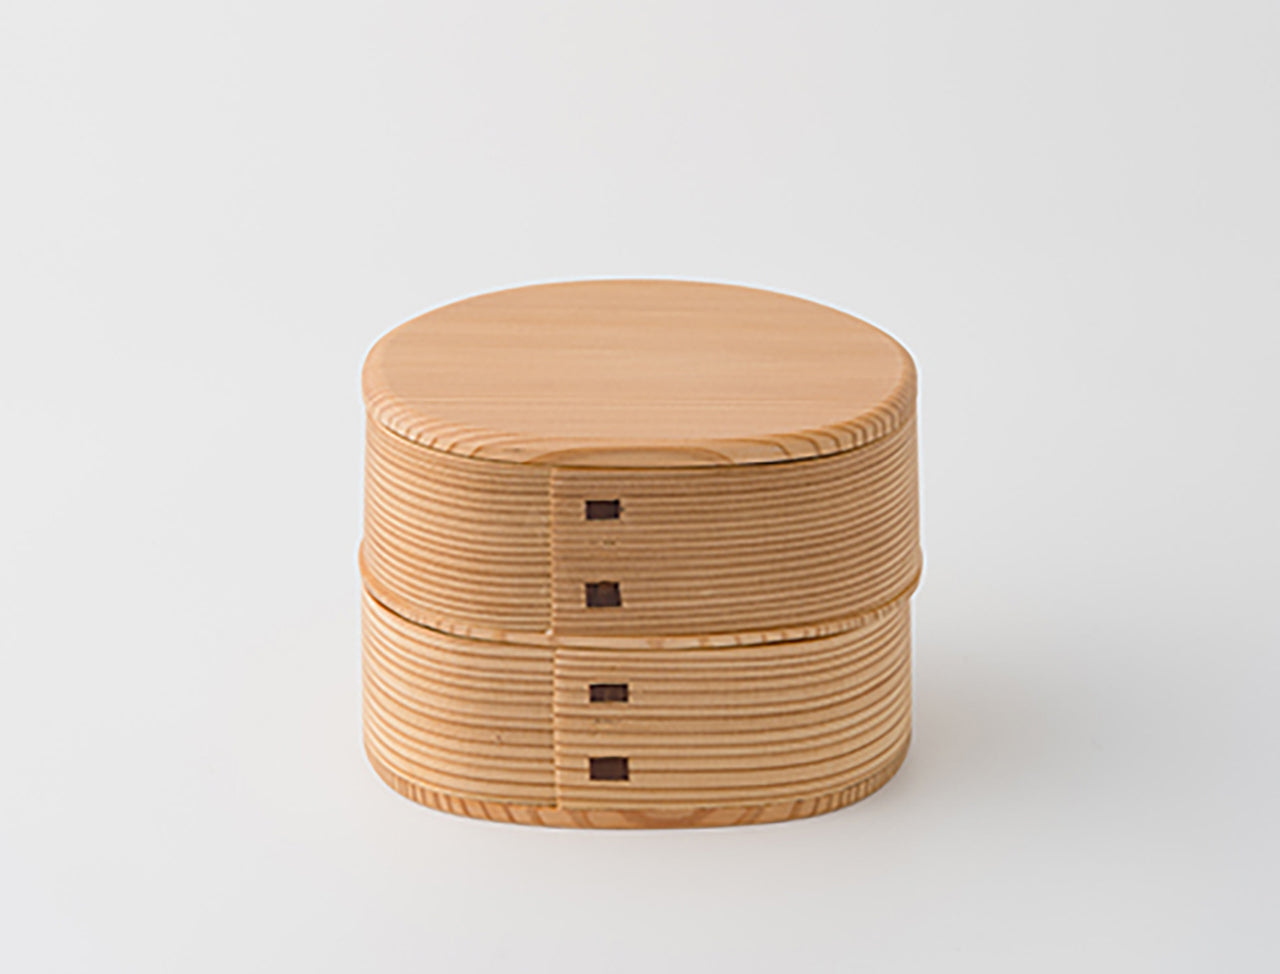 Box, Lunch box Irodori, 2-tiered, Bento - Odate bentwood, Wood crafts